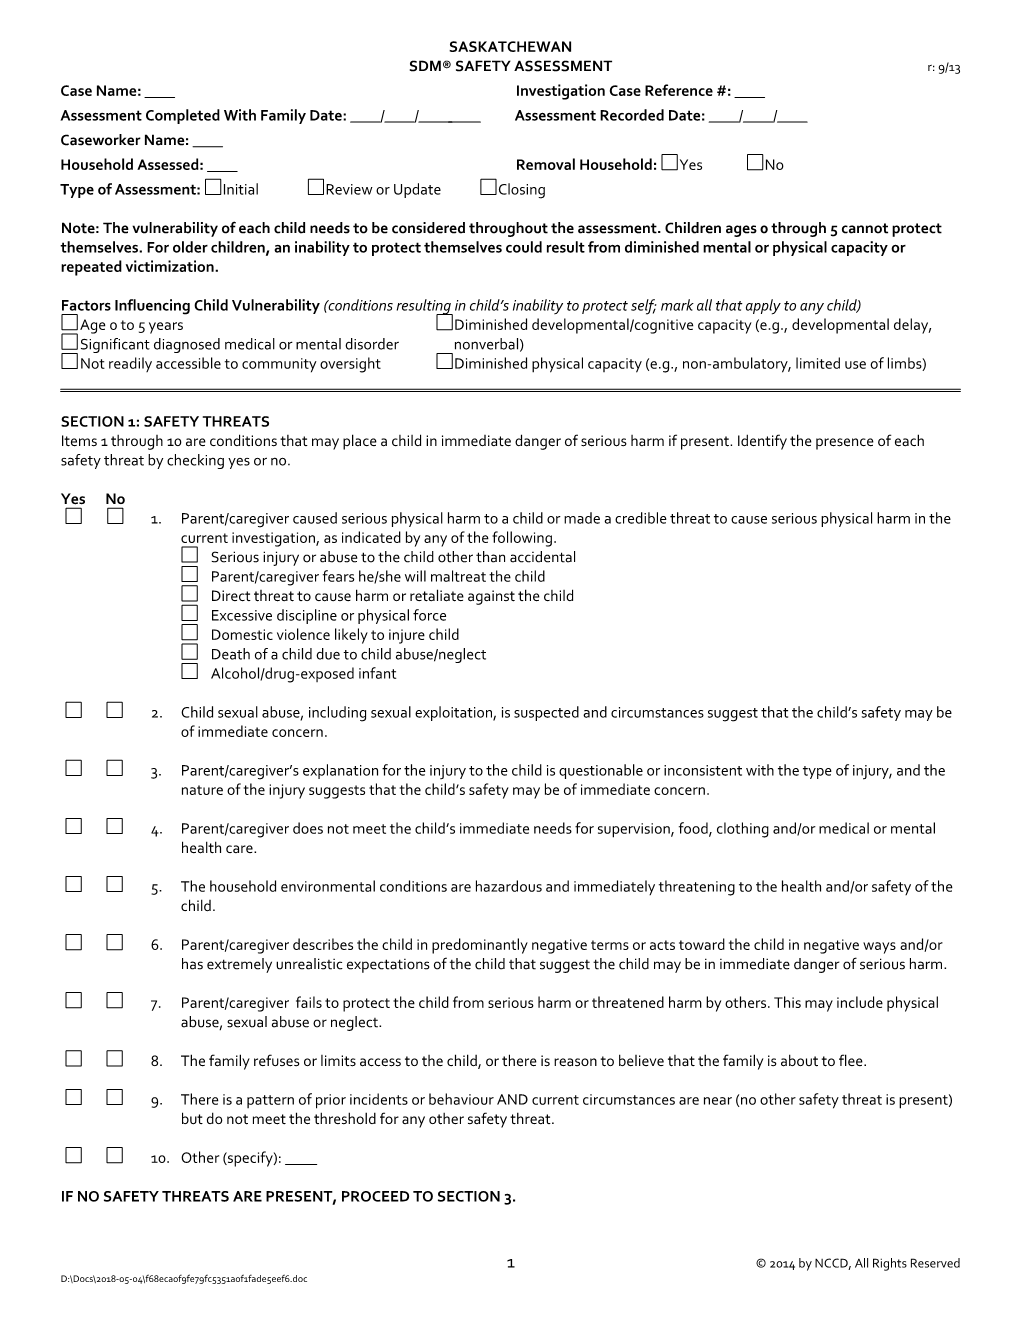 Working Copy of Saskatchewan PP Manual May 2014 for Nonlinkin Agencies